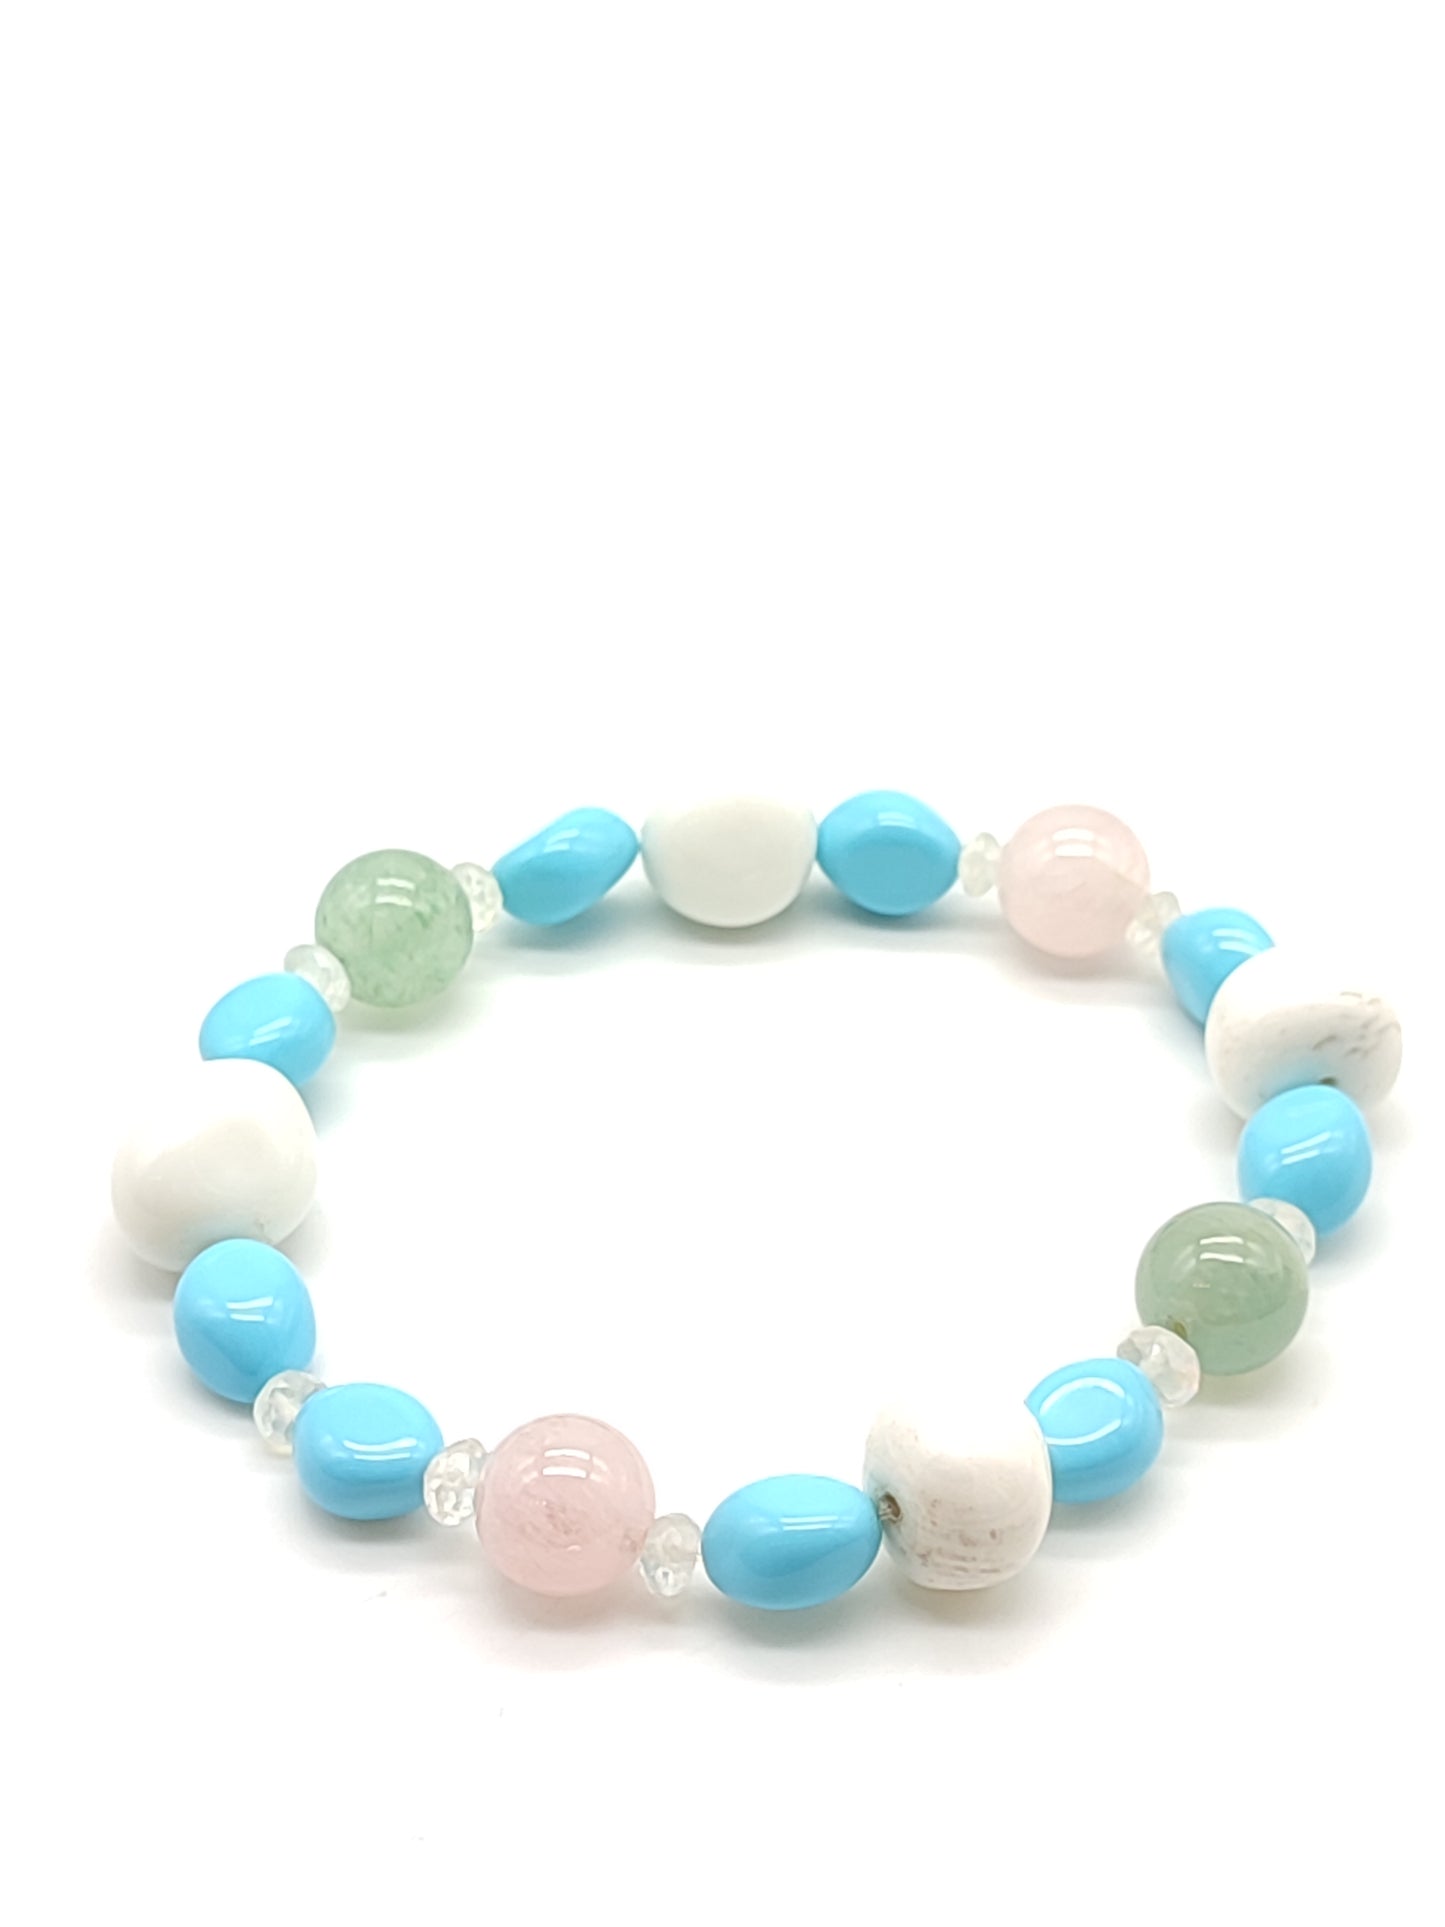 Sea bracelet with turquoises and quartz